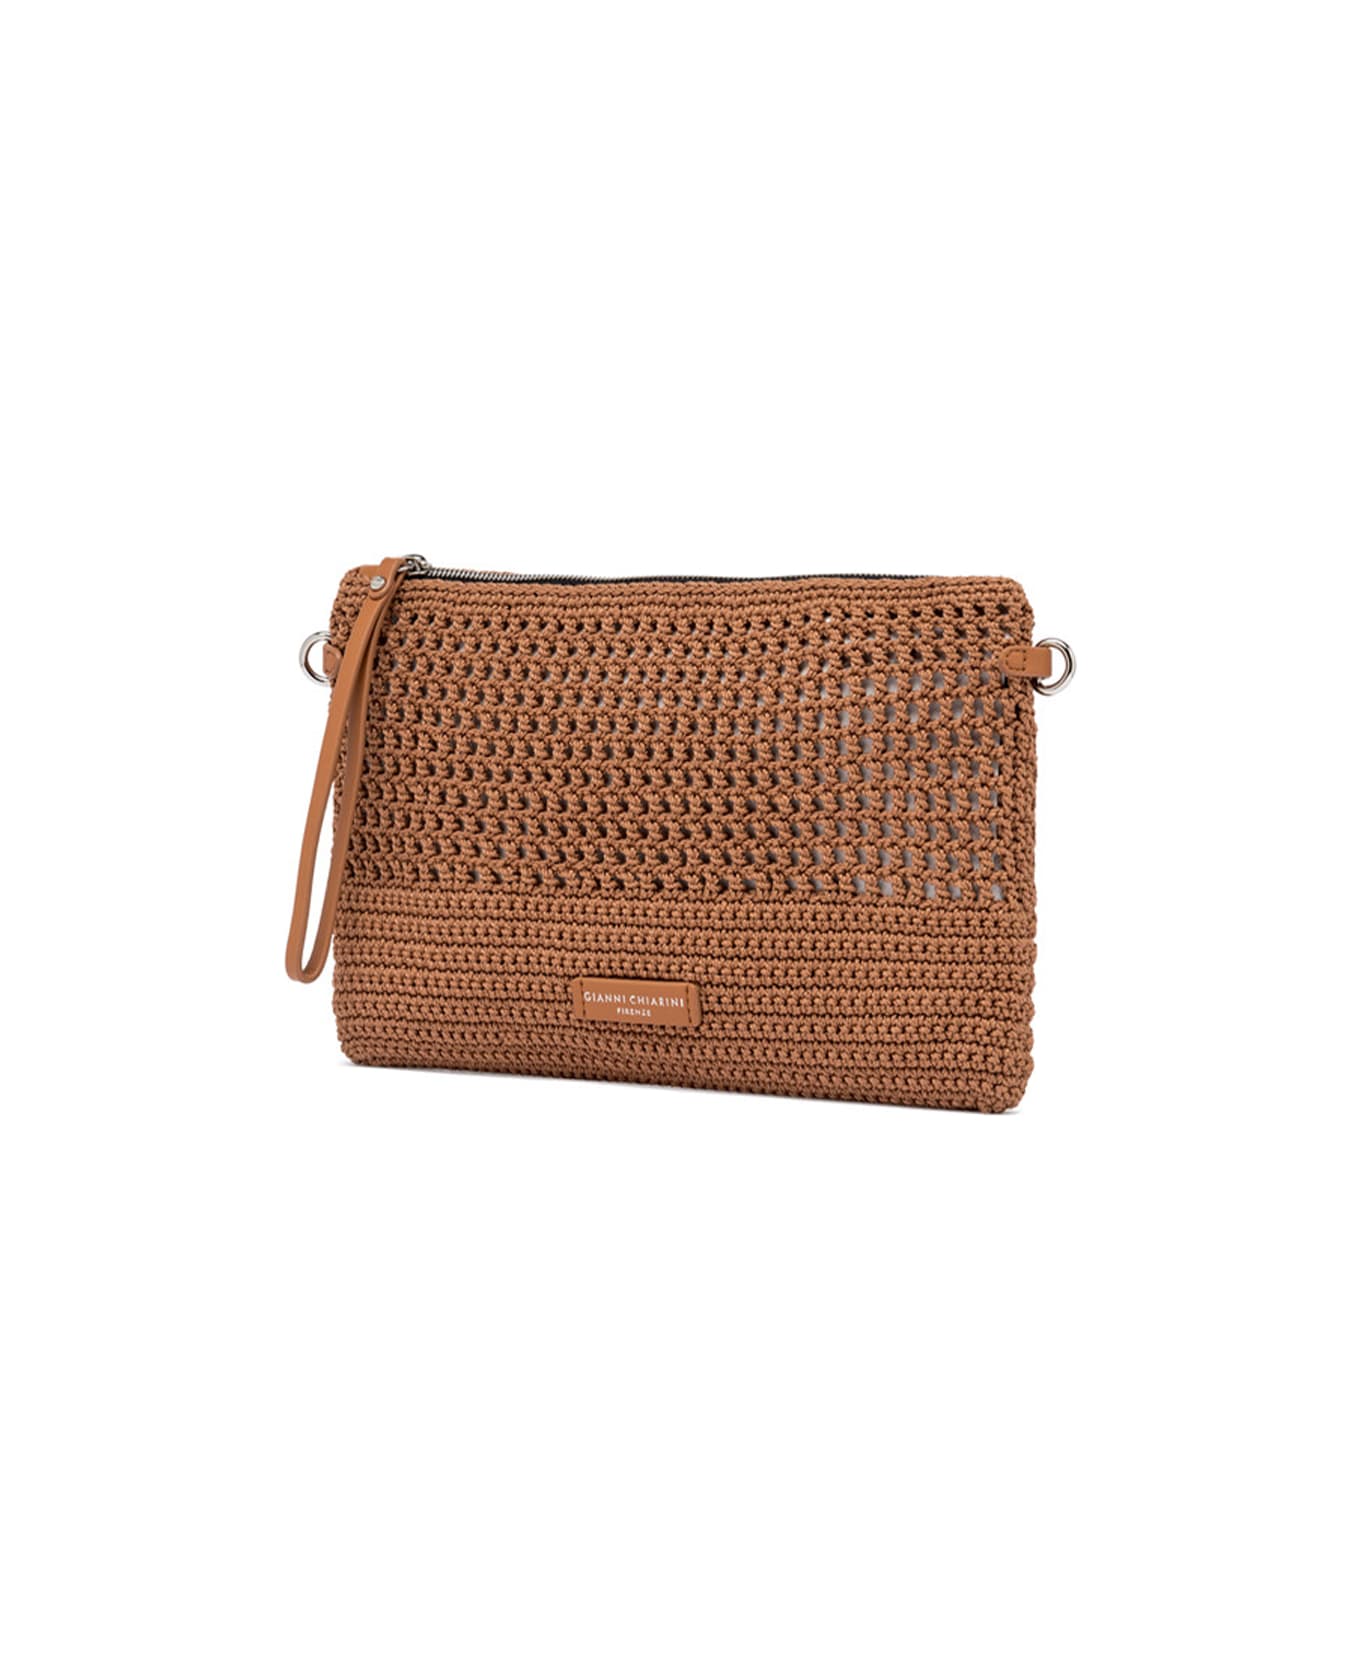 Gianni Chiarini Victoria Leather Clutch Bag In Crochet Fabric - COPPER